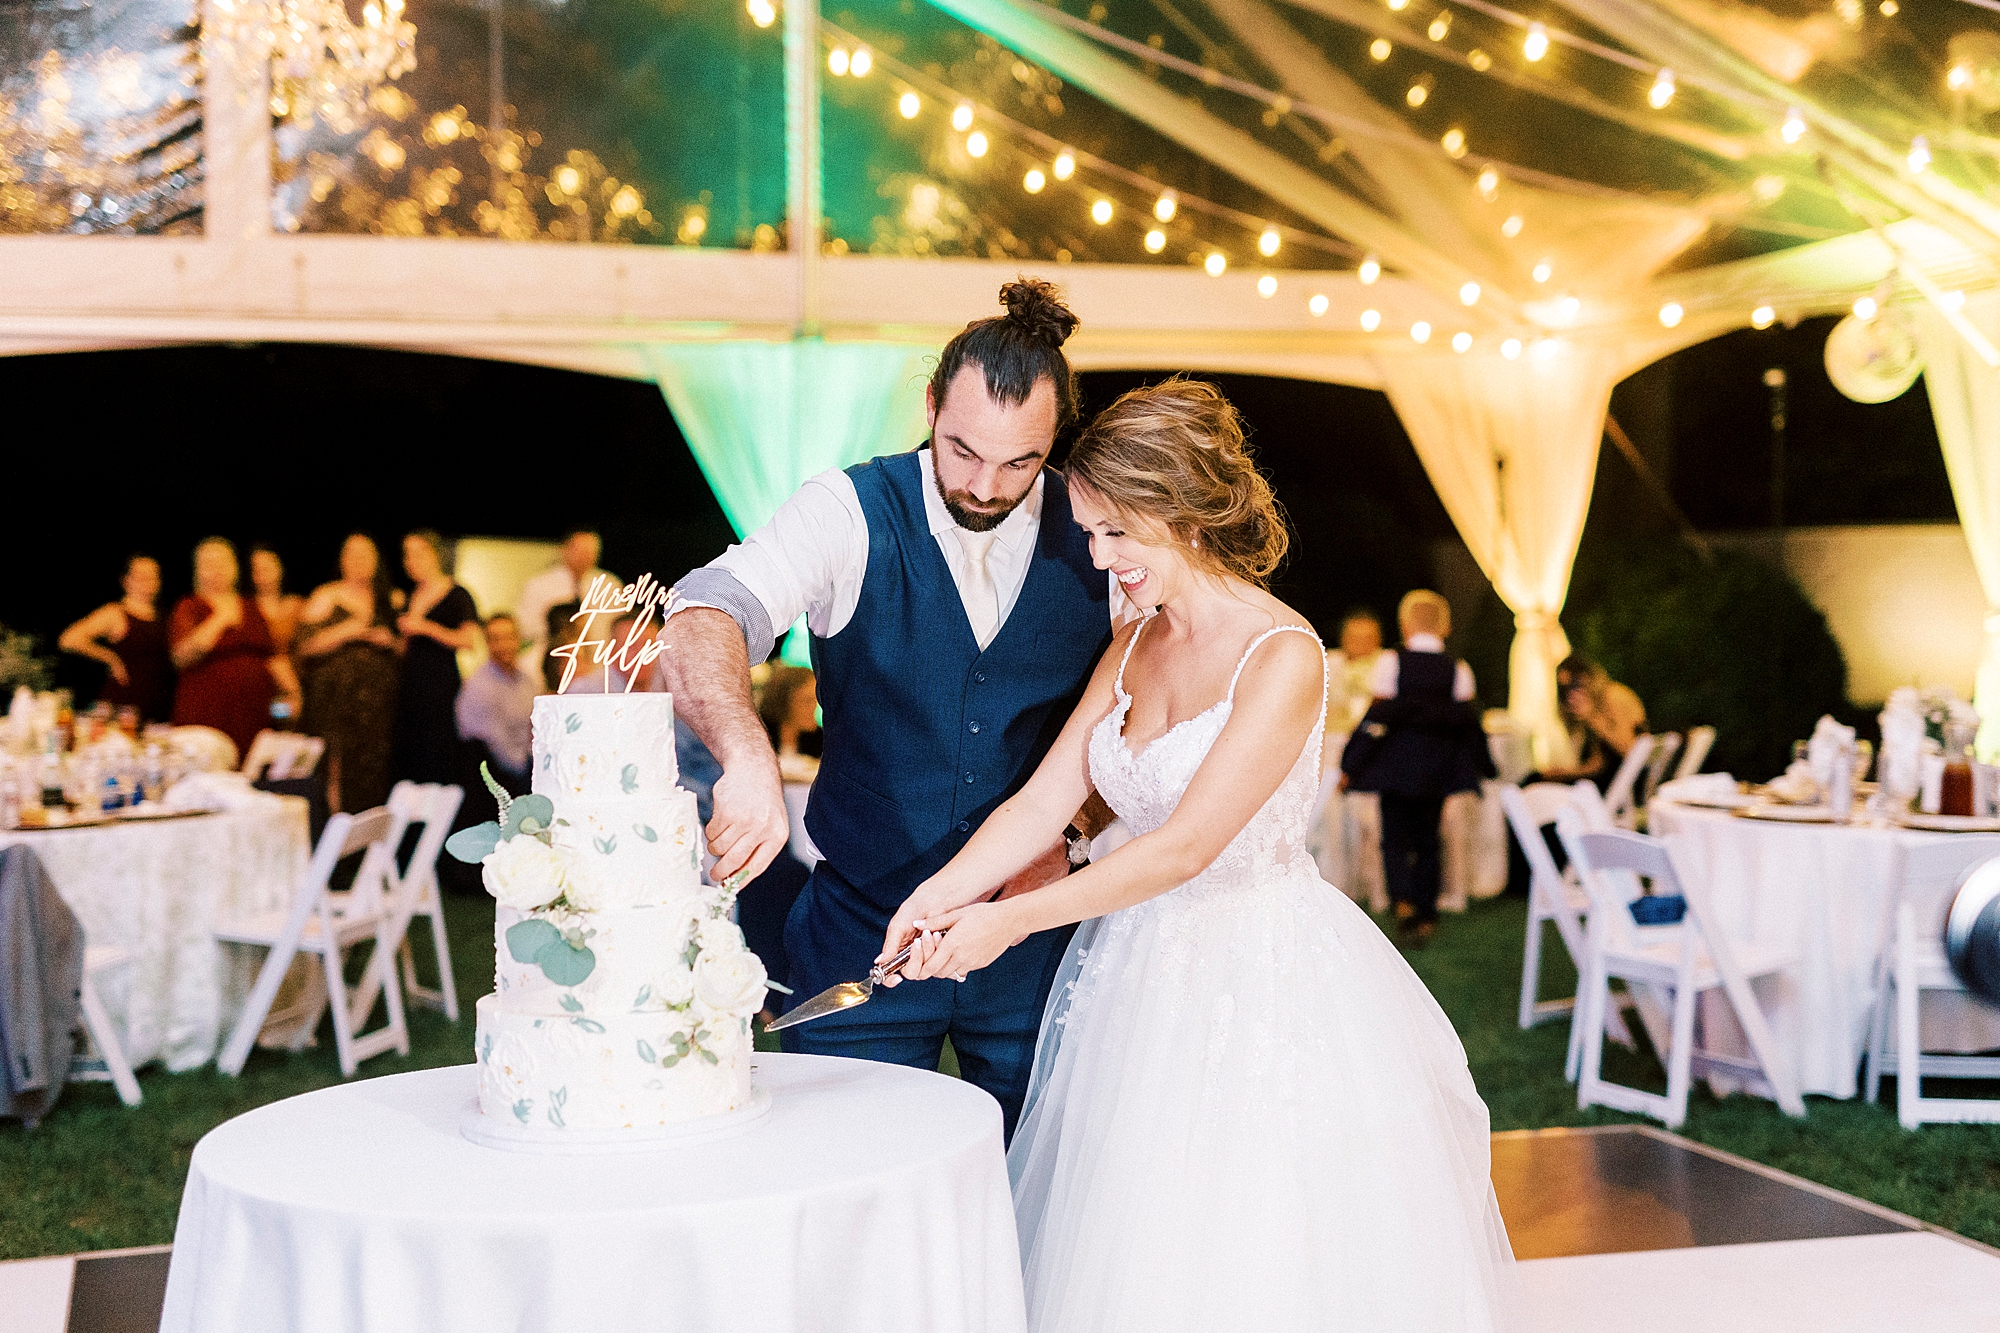 bride and groom cut wedding cake during NC wedding reception